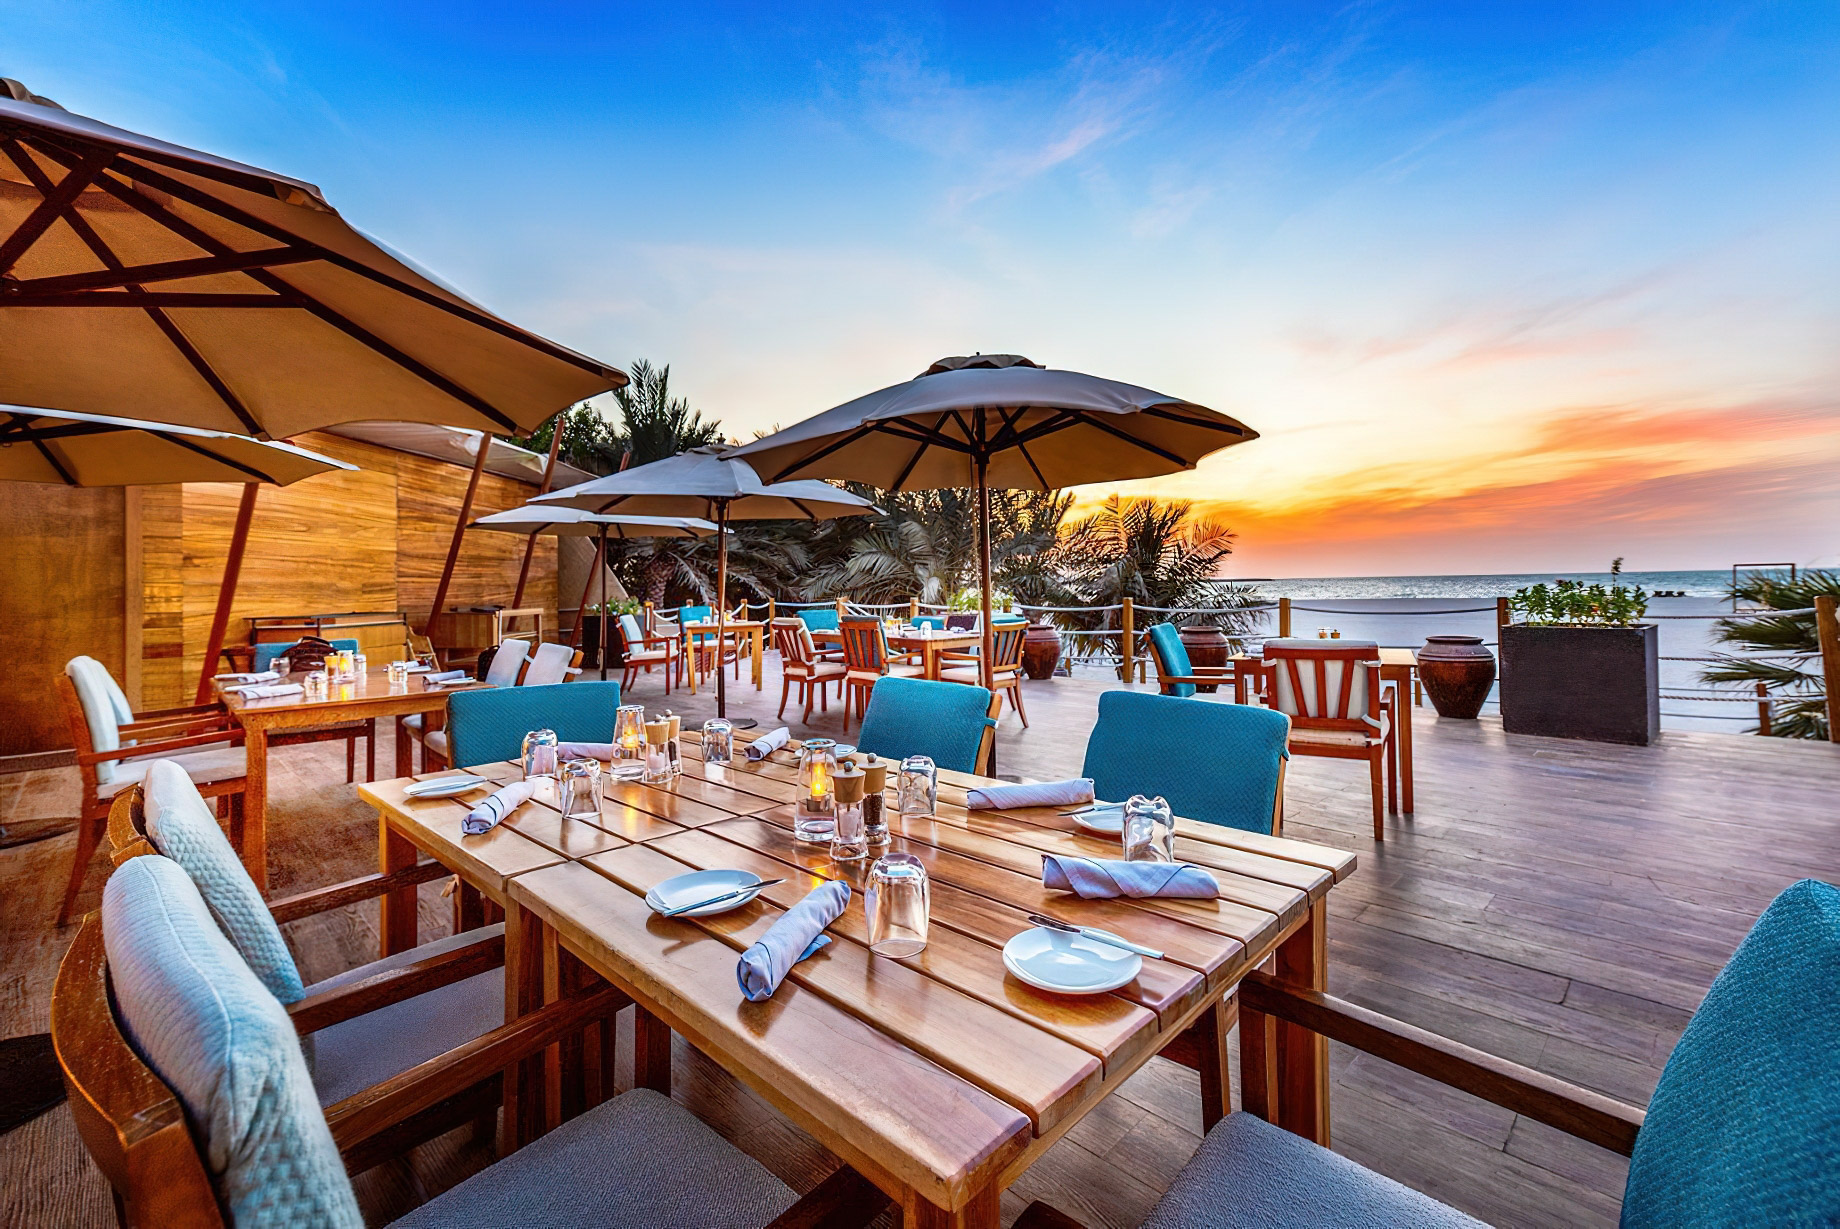 The Ritz-Carlton Ras Al Khaimah, Al Hamra Beach Hotel - UAE - Shore House Restaurant Patio Sunset